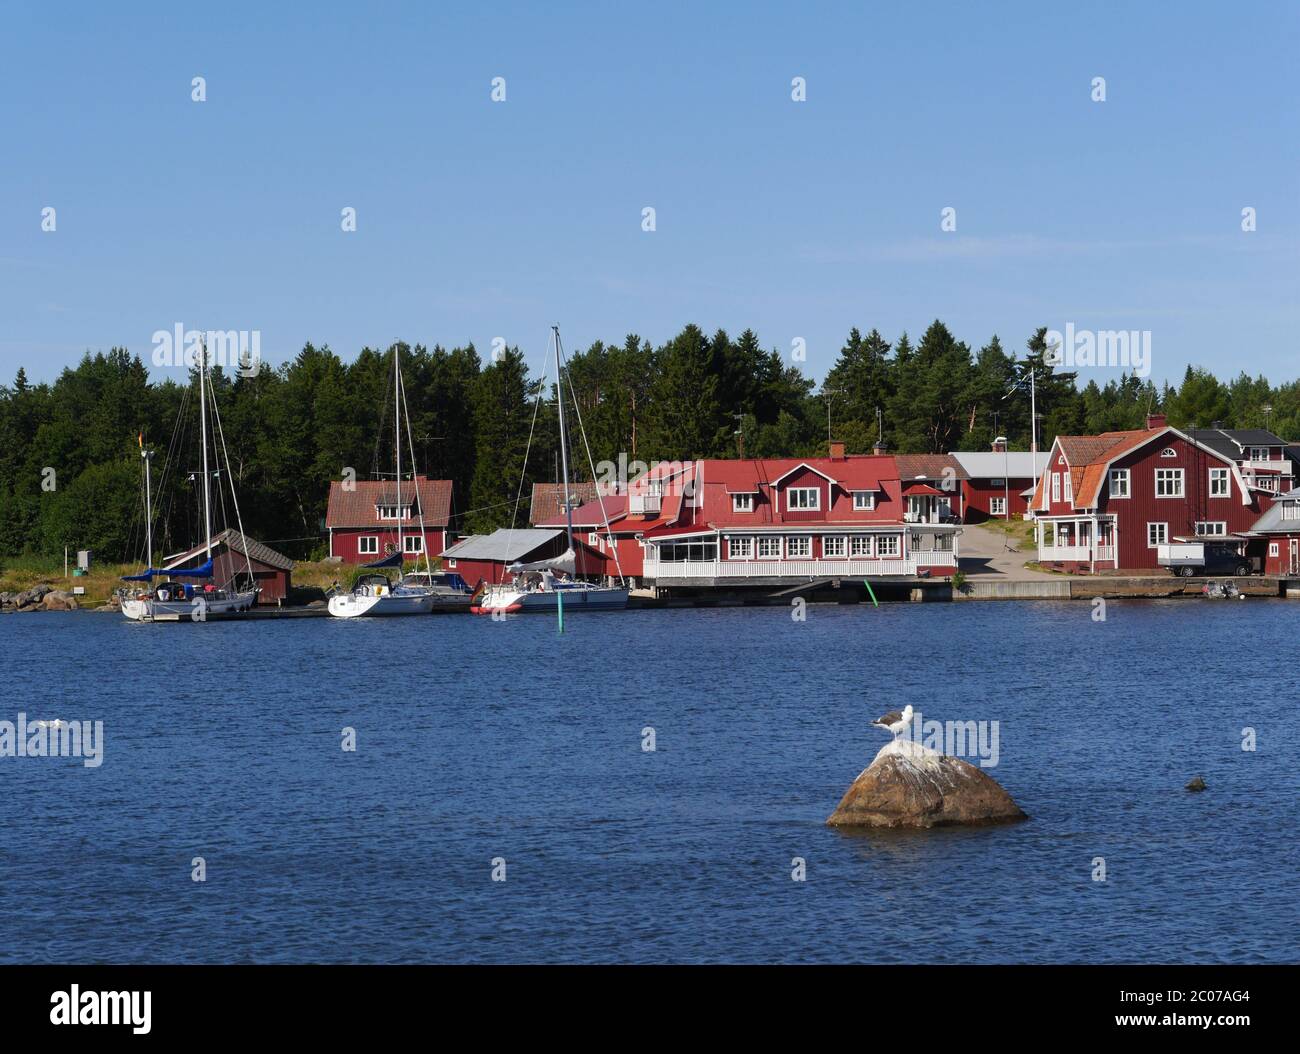 fishermen's village in sweden Stock Photo